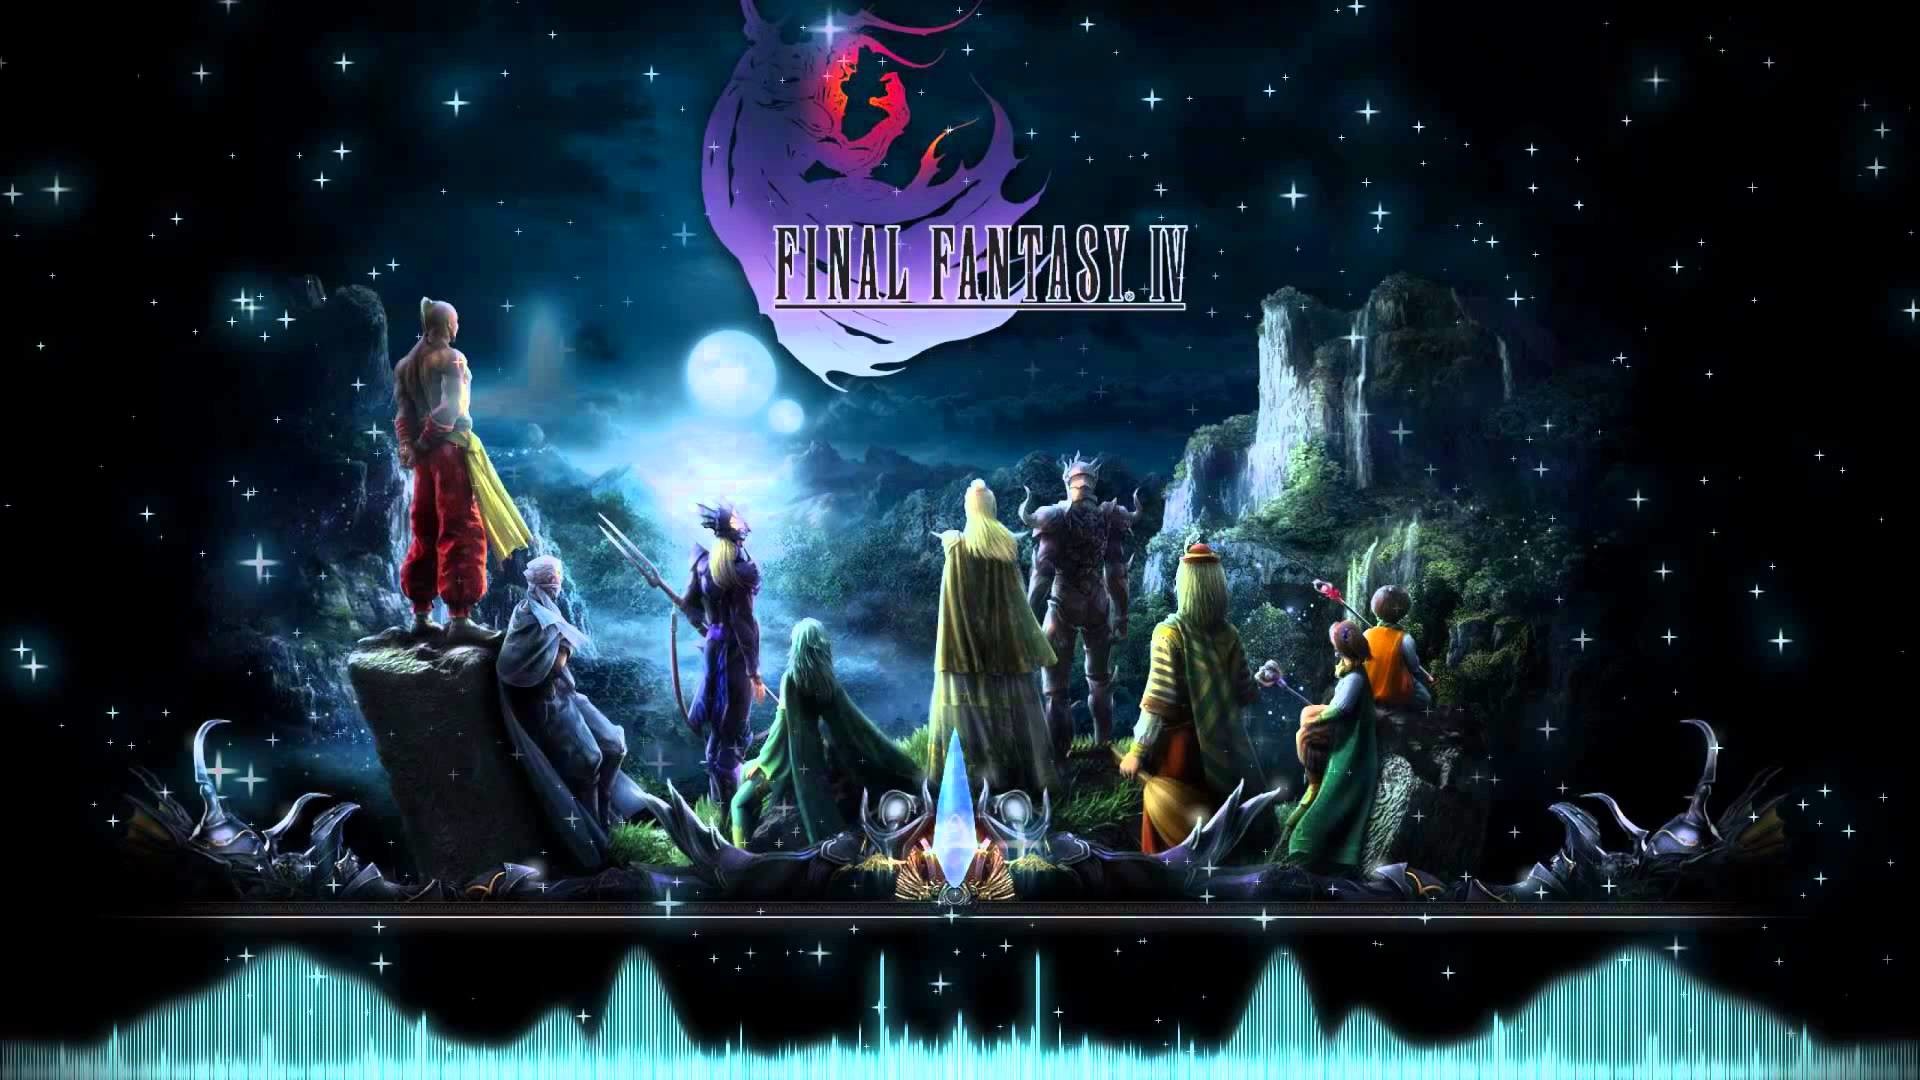 Final Fantasy IV Boss Battle Theme Metal Cover by Alexander Engstrm